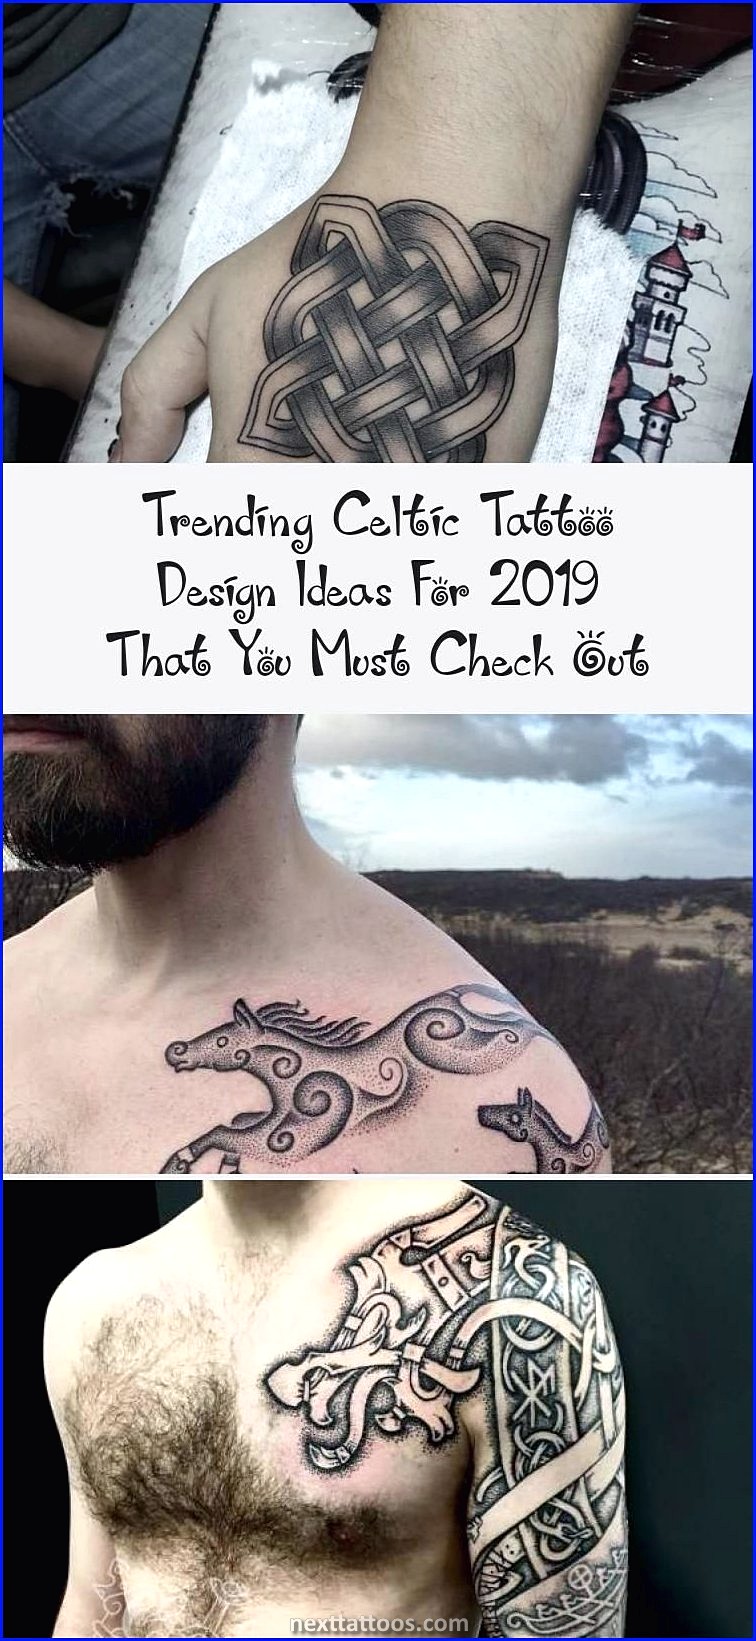 Trending Tattoo Ideas For Men and Women